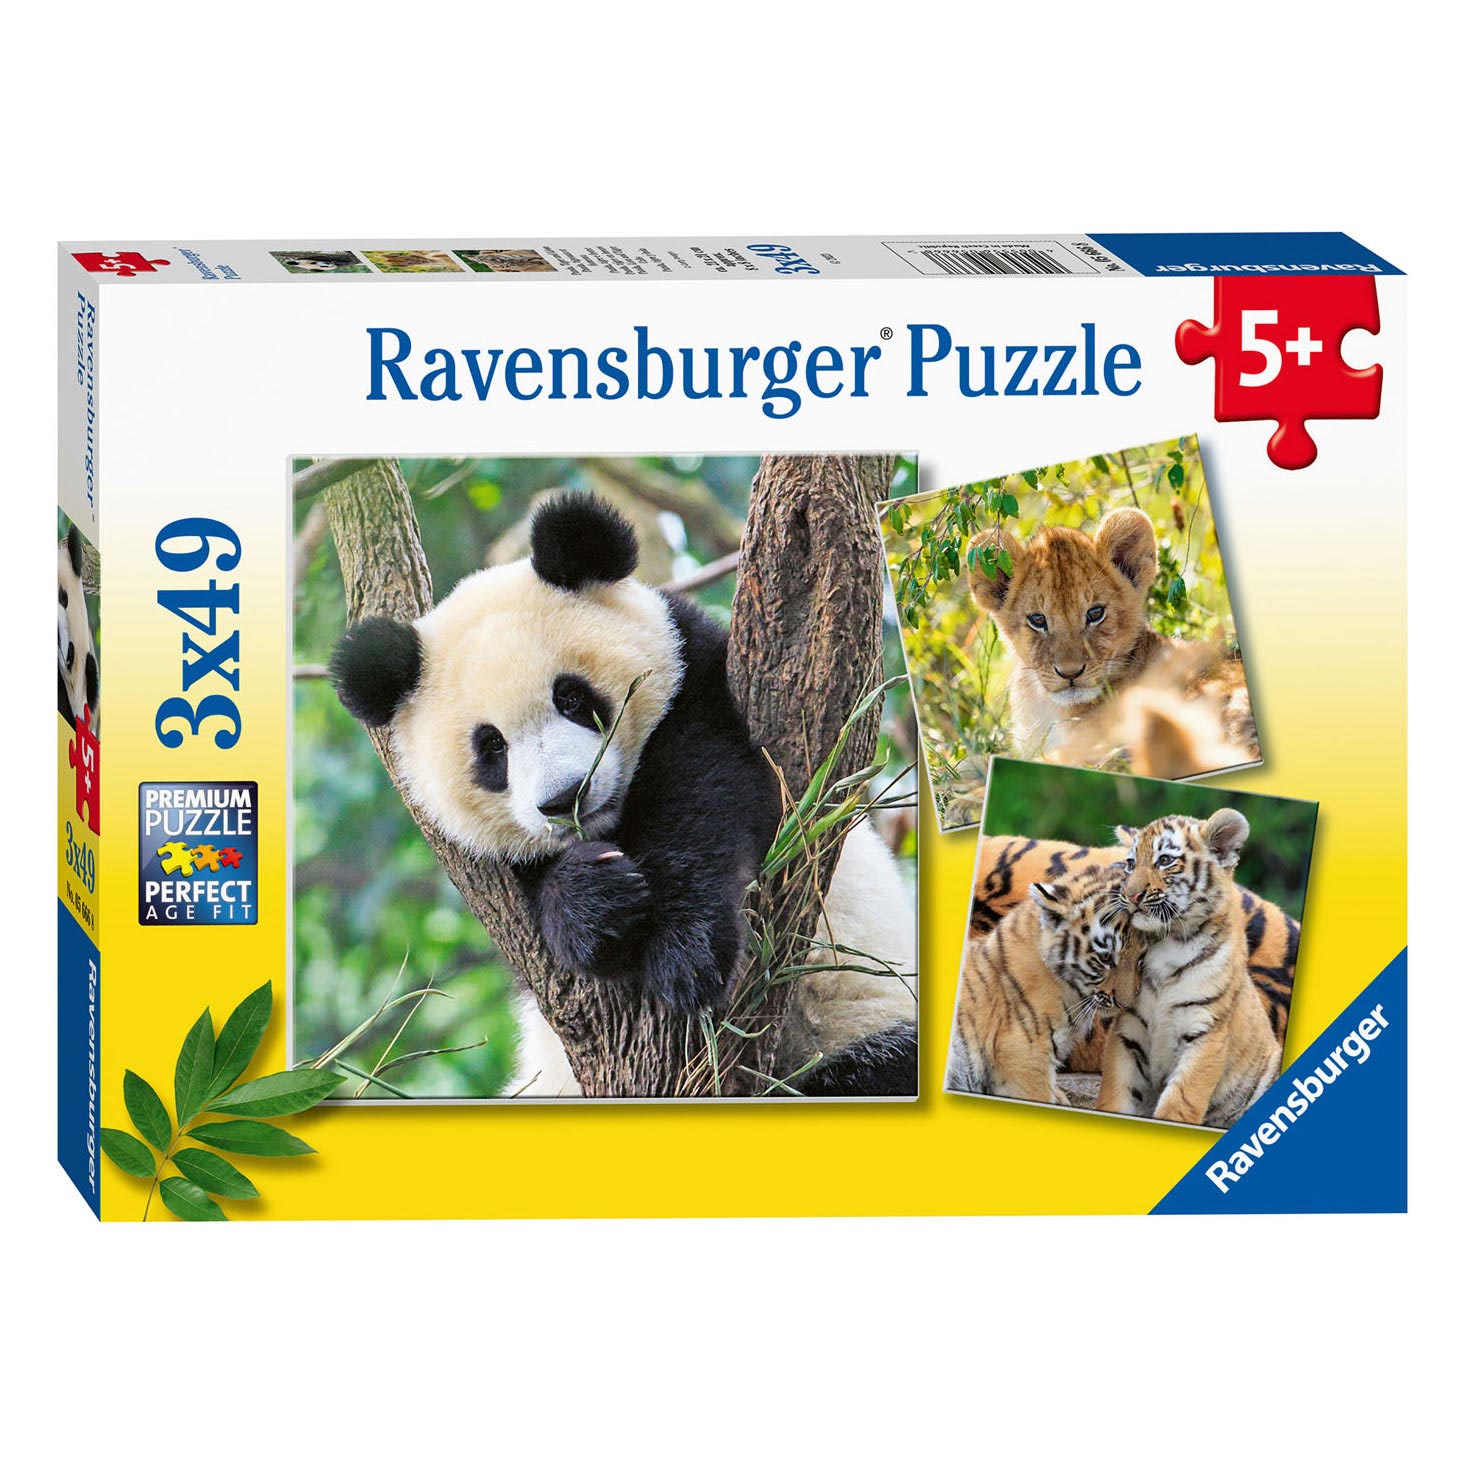 Ravensburger Puzzel Panda